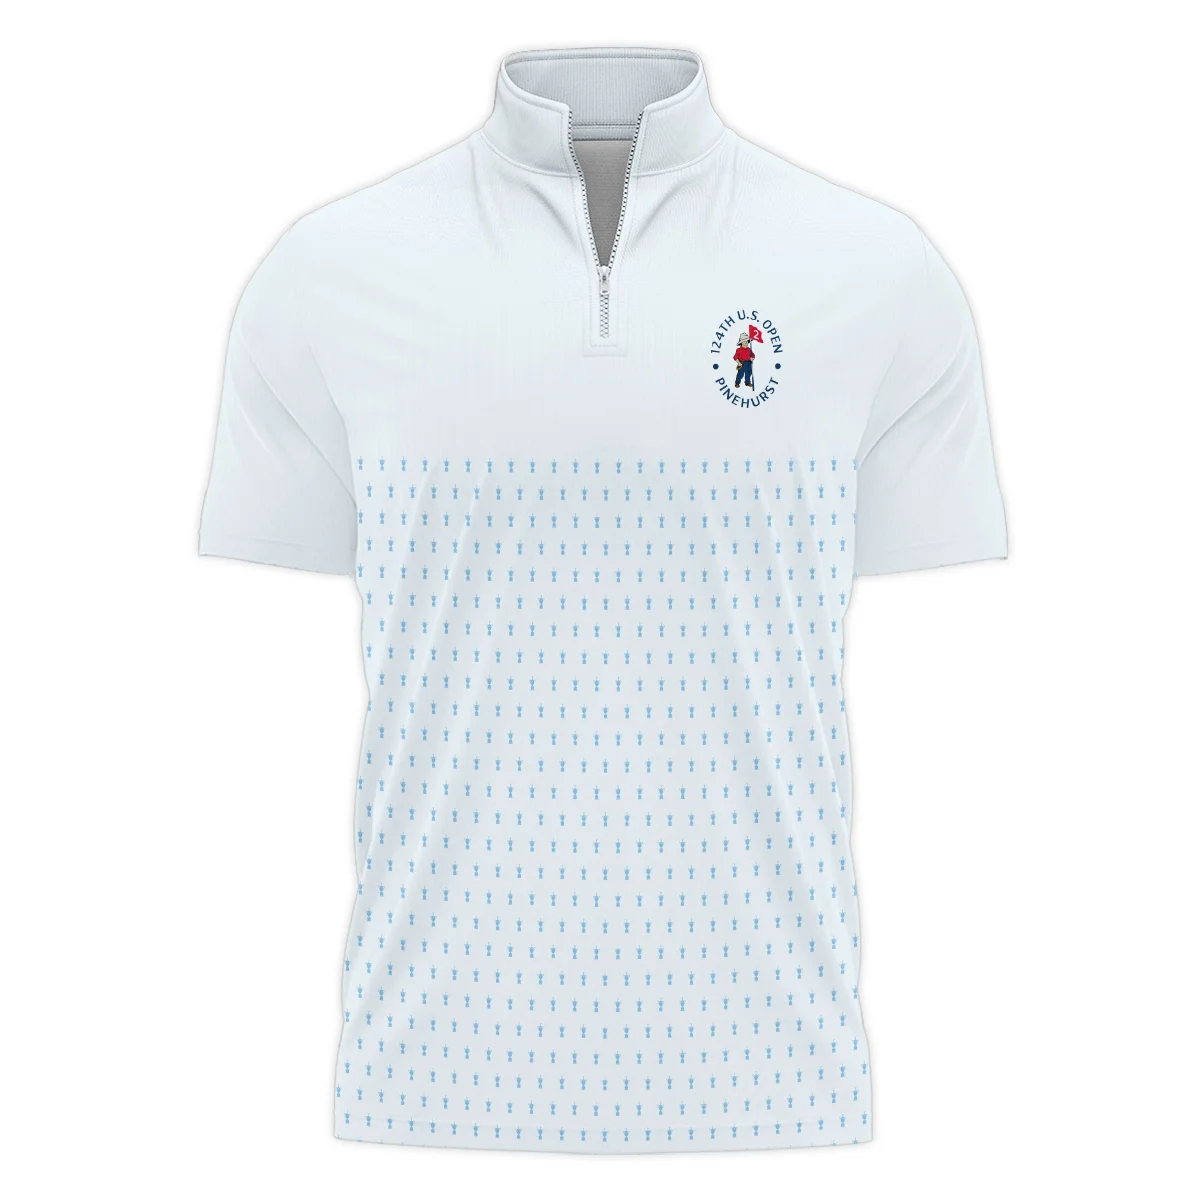 U.S Open Trophy Pattern Light Blue 124th U.S. Open Pinehurst Callaway Polo Shirt Style Classic Polo Shirt For Men